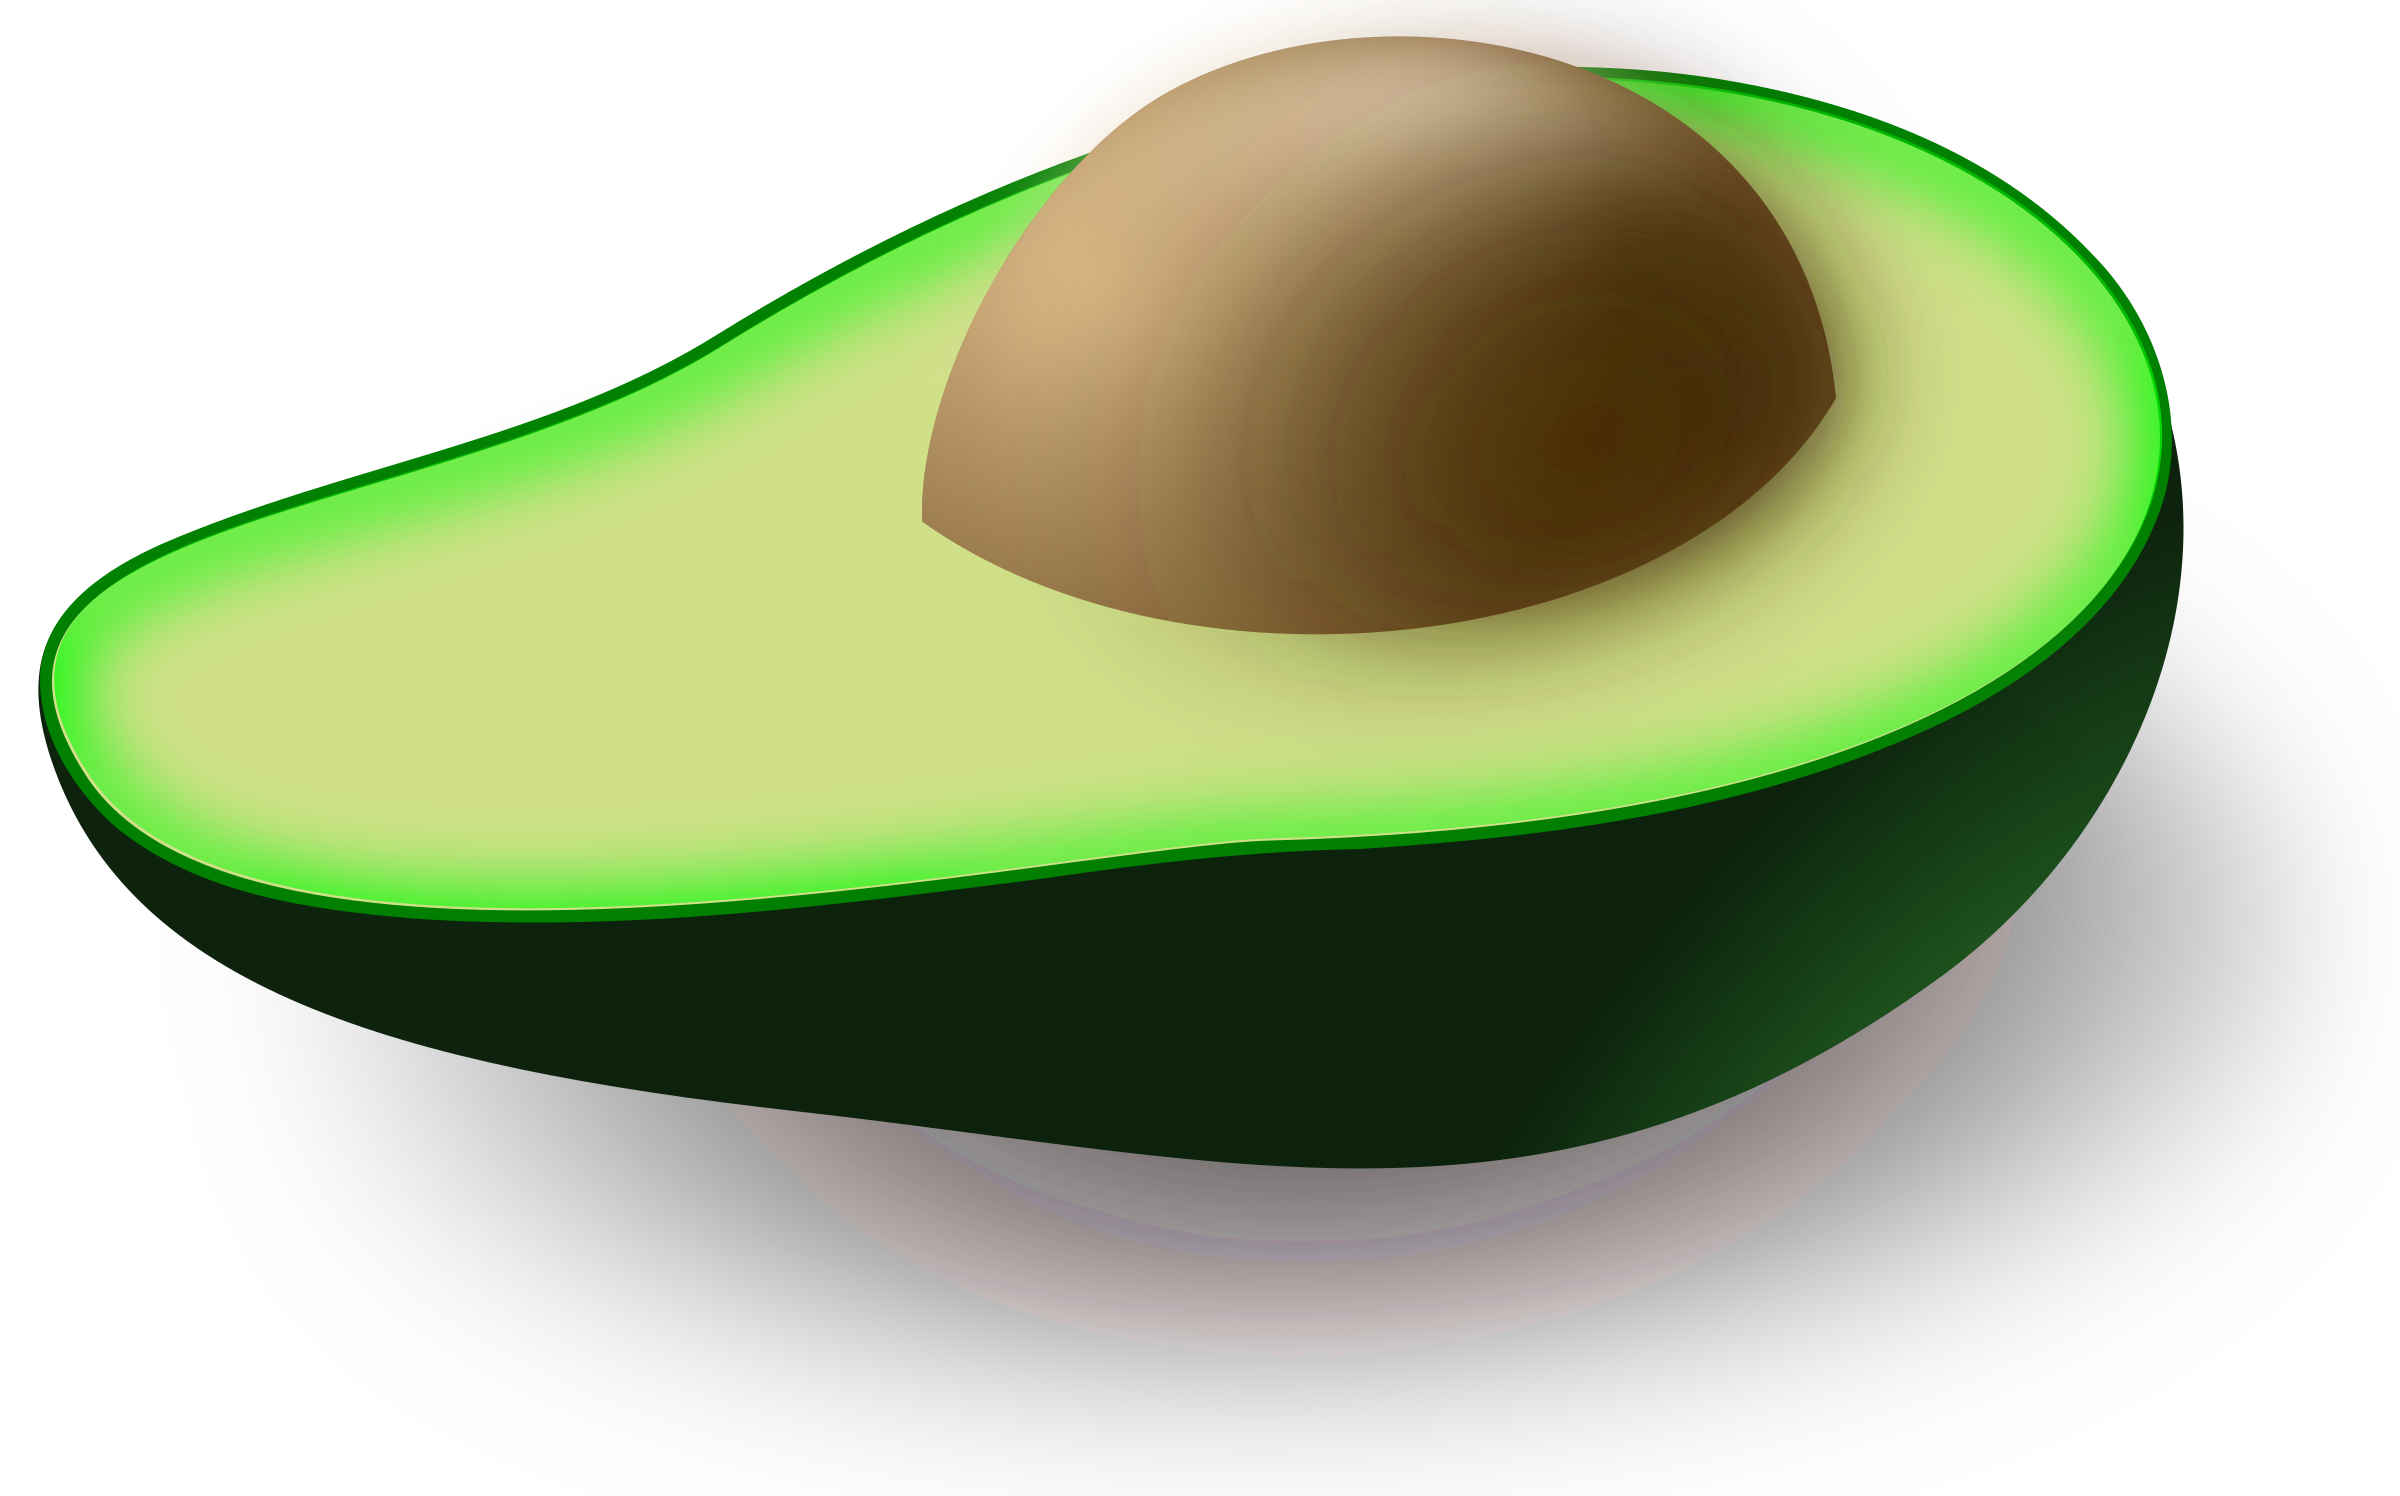 Avocado avocado seed